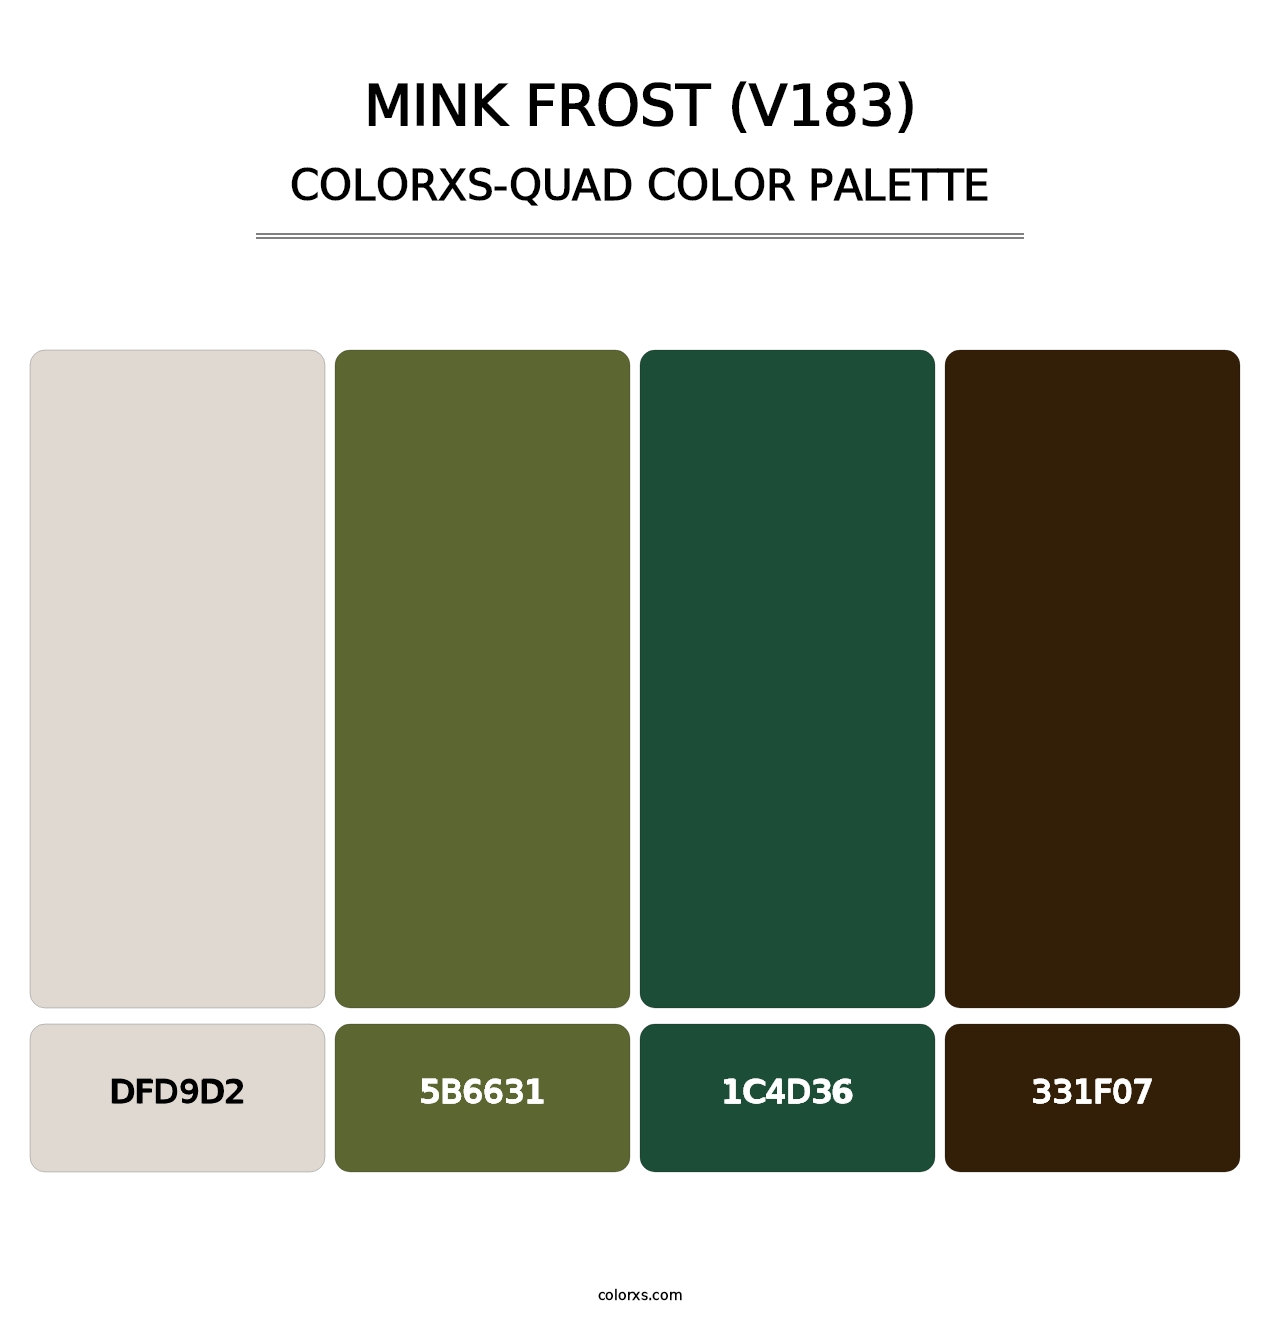 Mink Frost (V183) - Colorxs Quad Palette